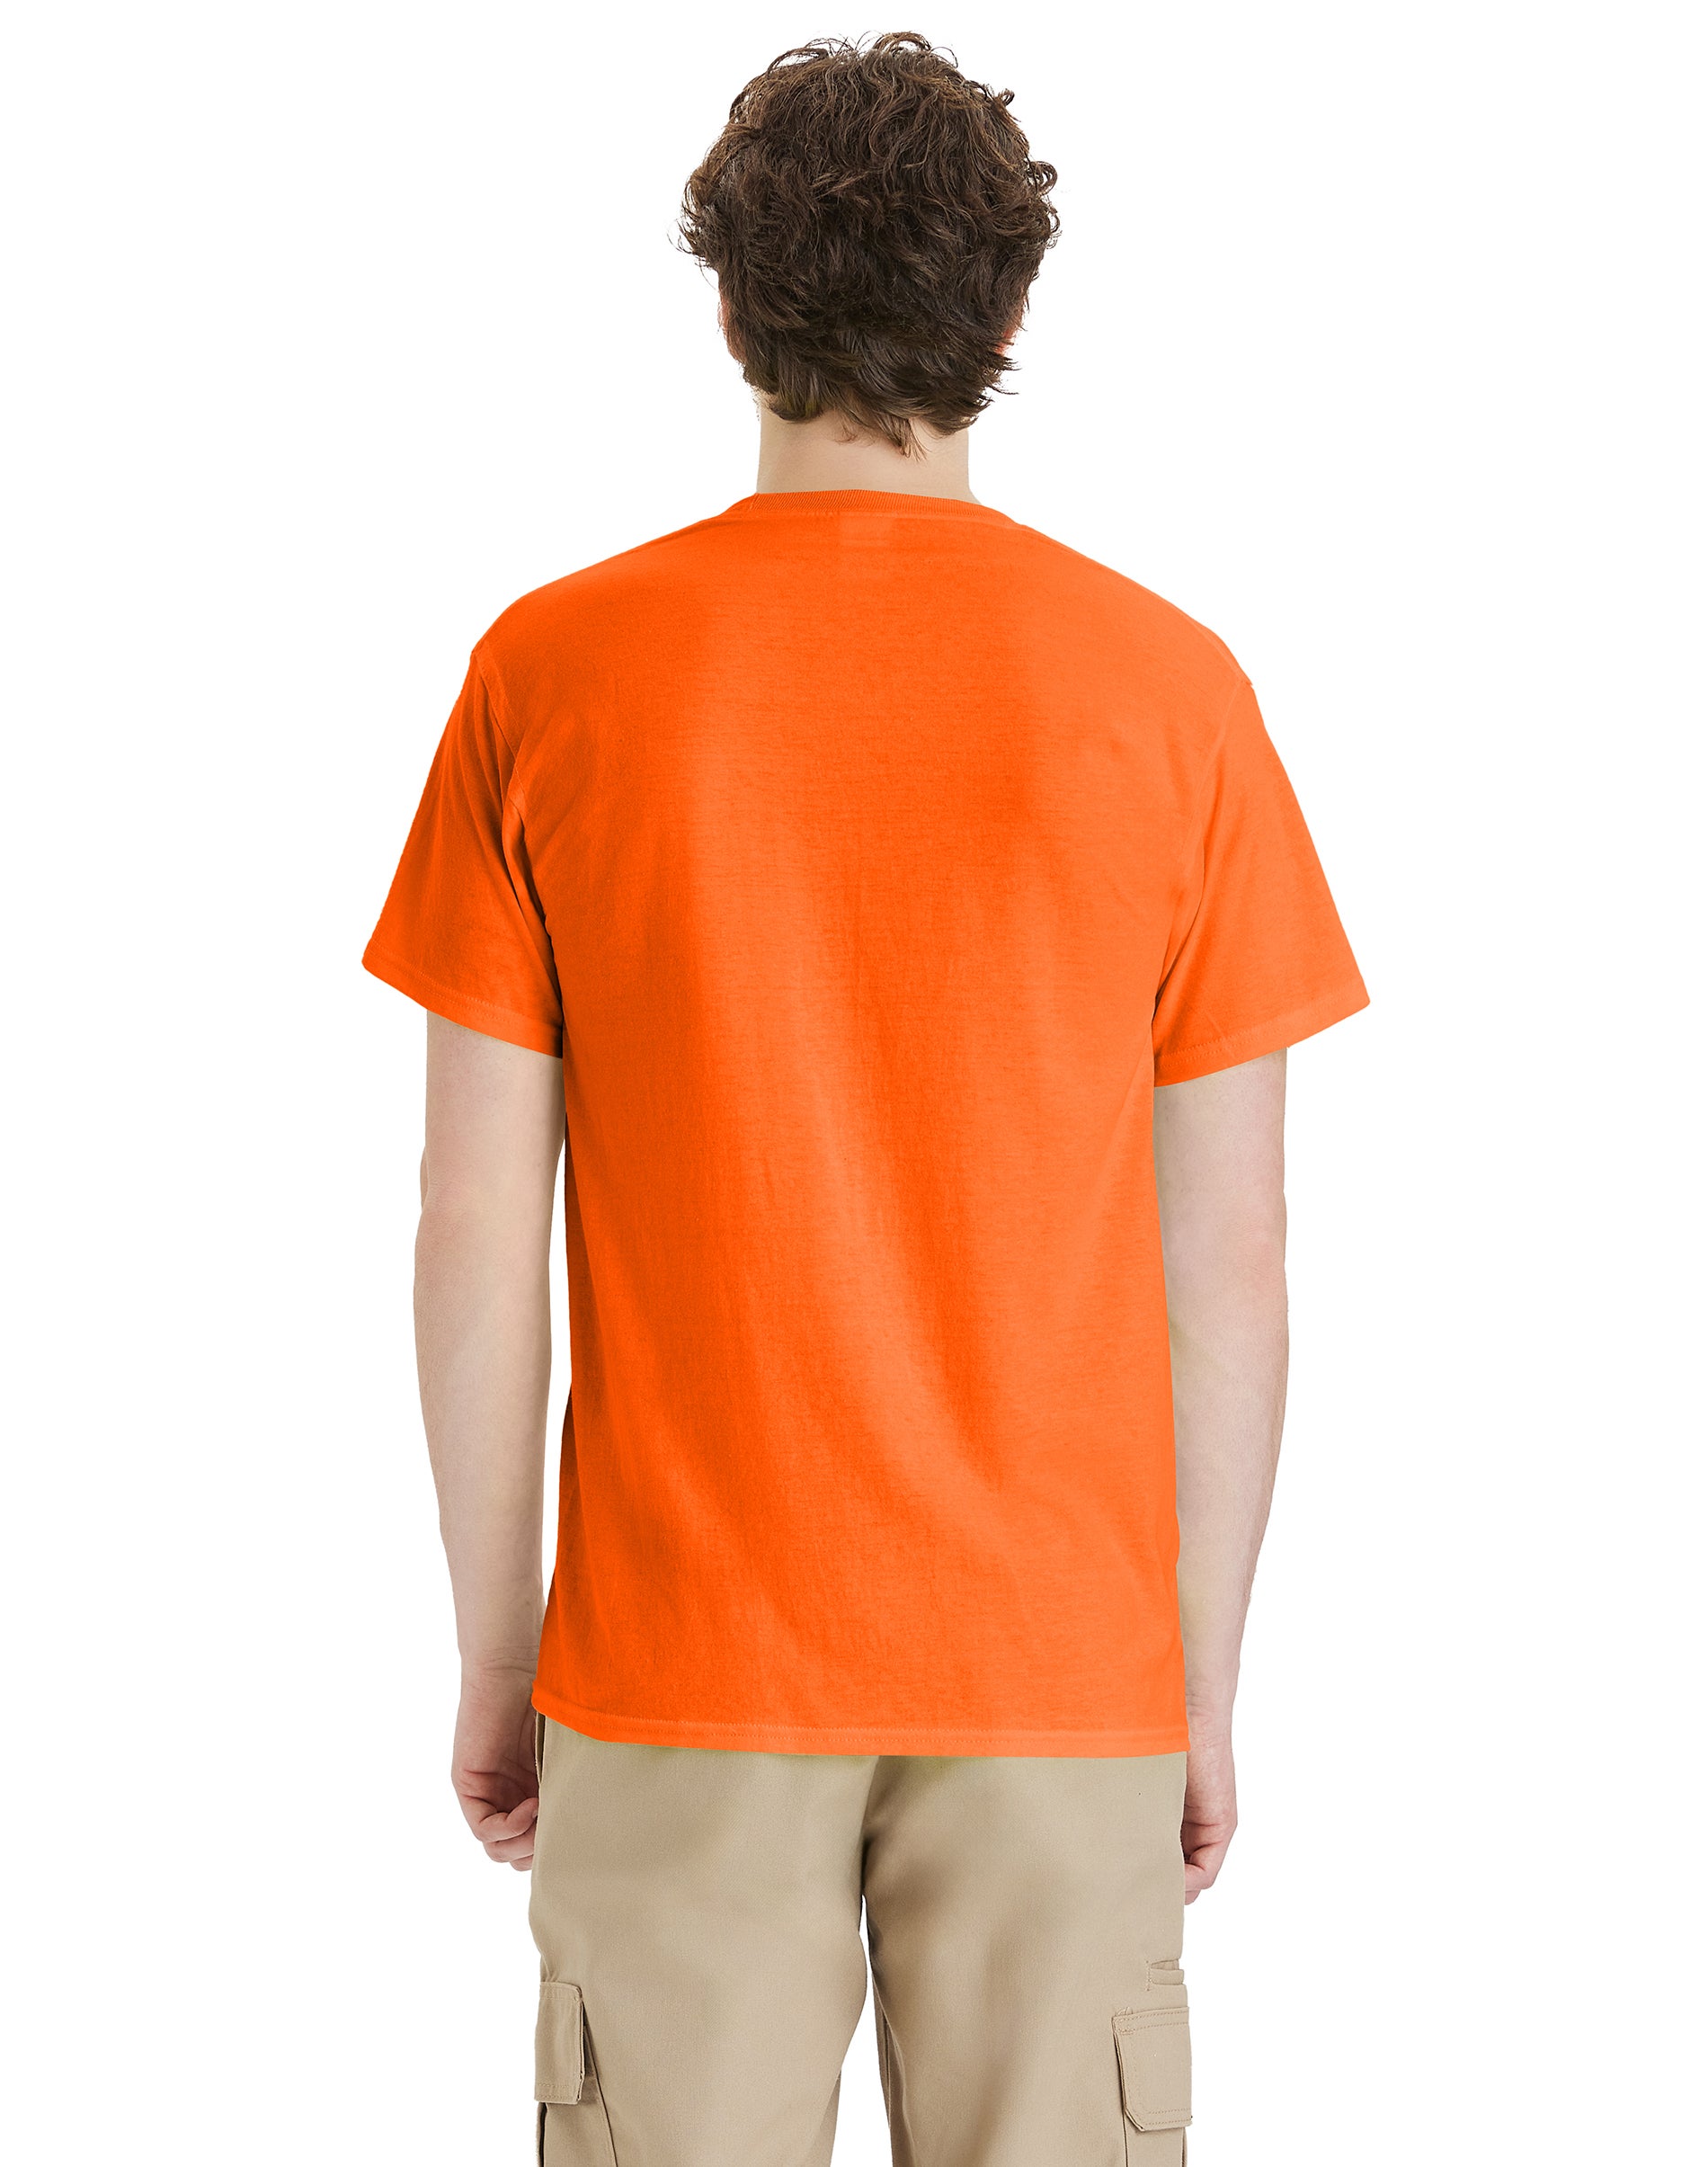 Hanes Workwear X-Temp Men's Pocket T-Shirt, 2-Pack Safety Orange M - image 3 of 5